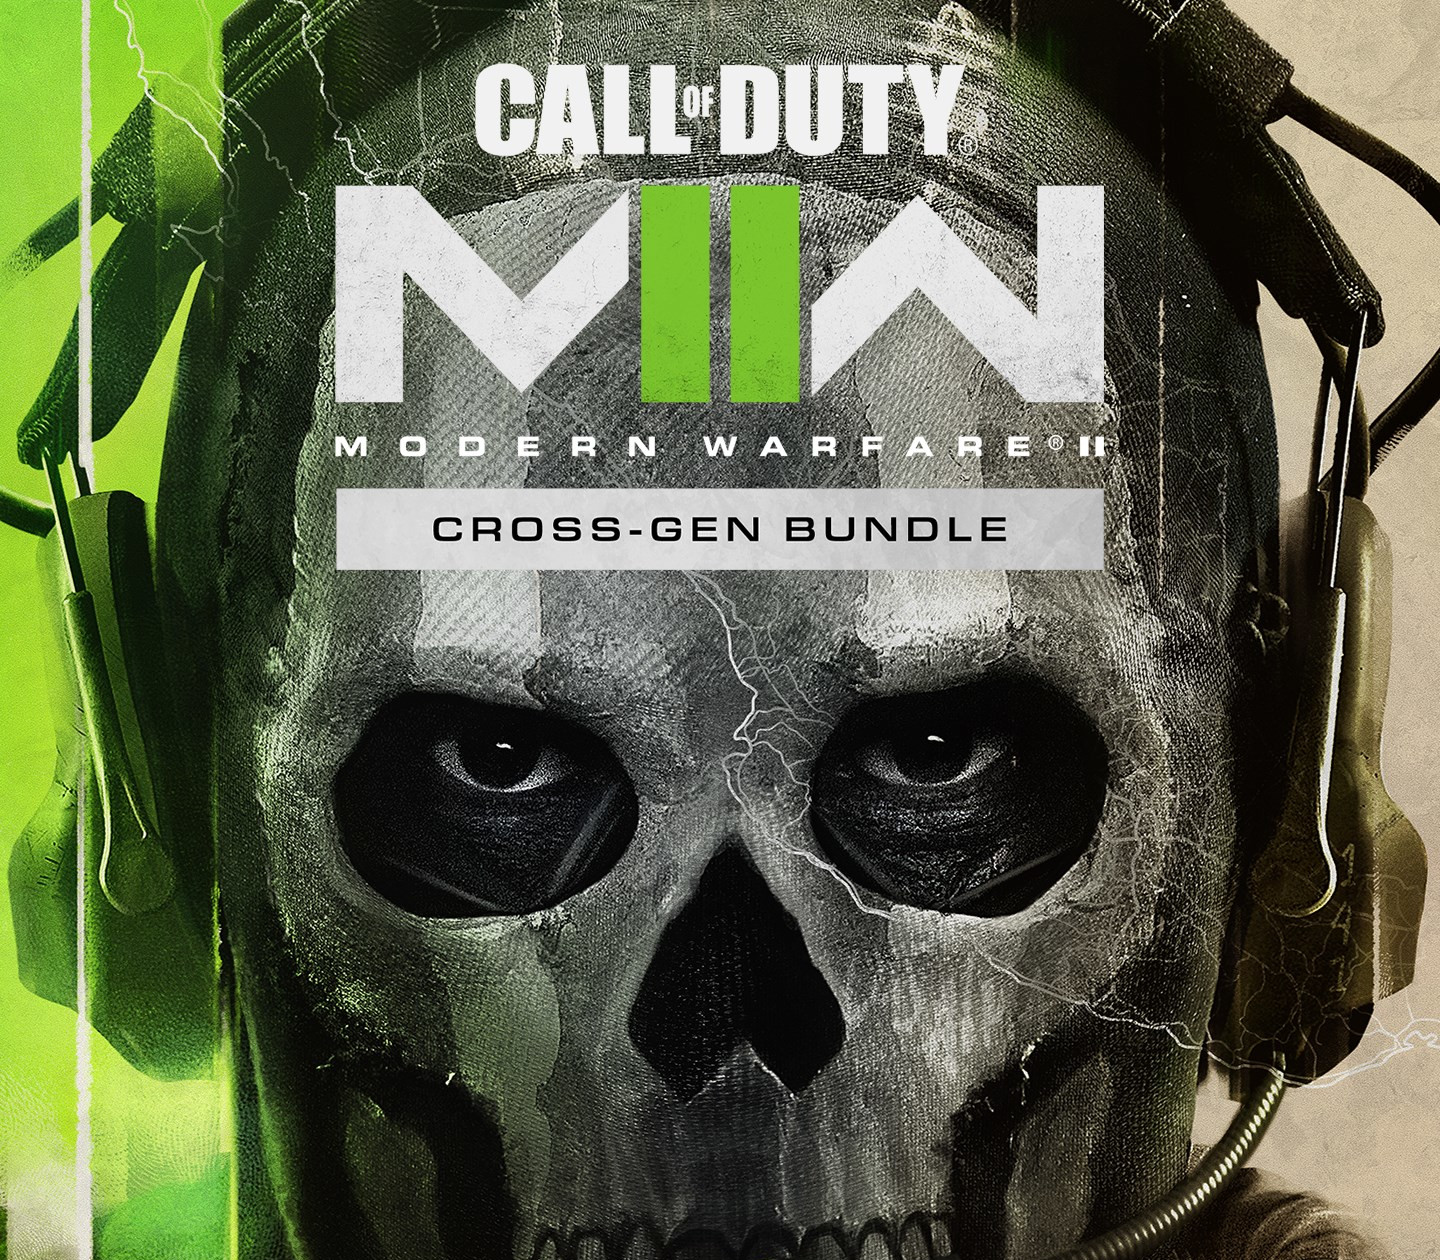 Call Of Duty: Modern Warfare II — Vault Edition on XOne — price